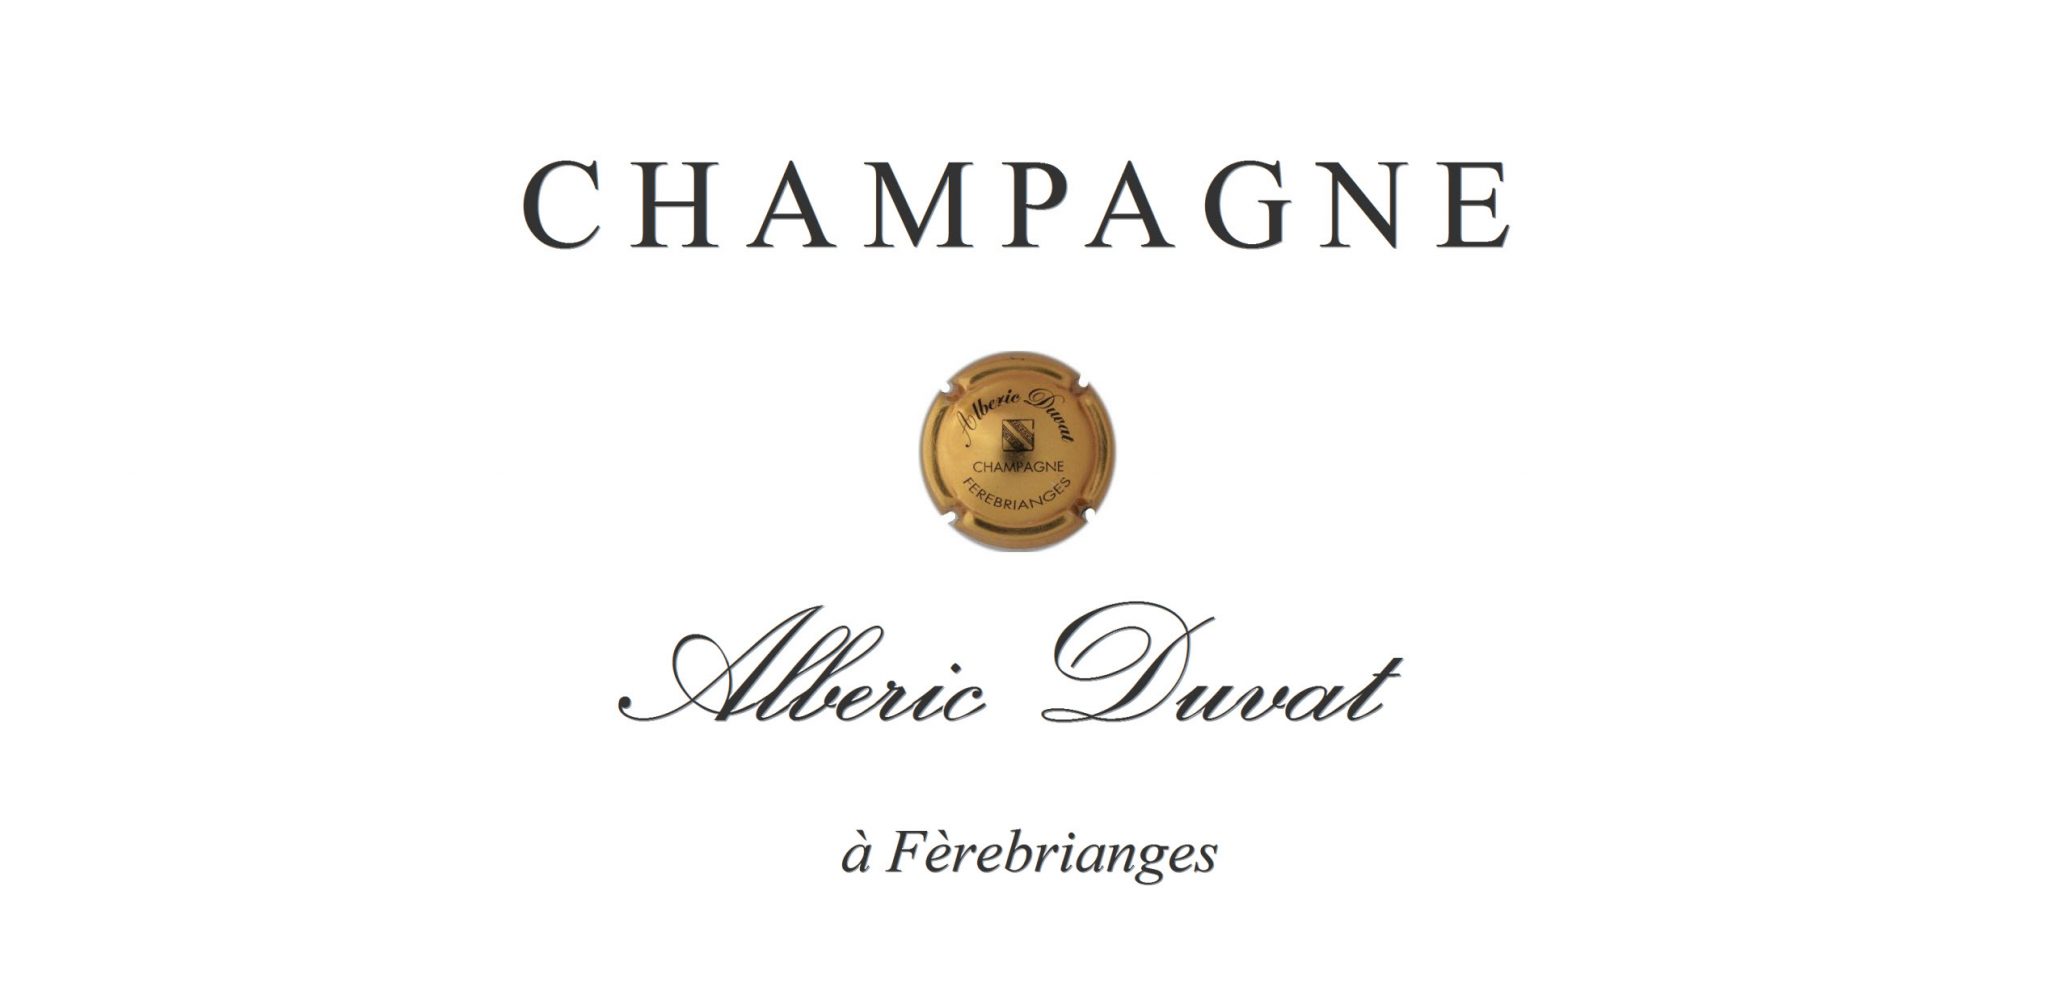 Champagne Xavier Duvat & Fils